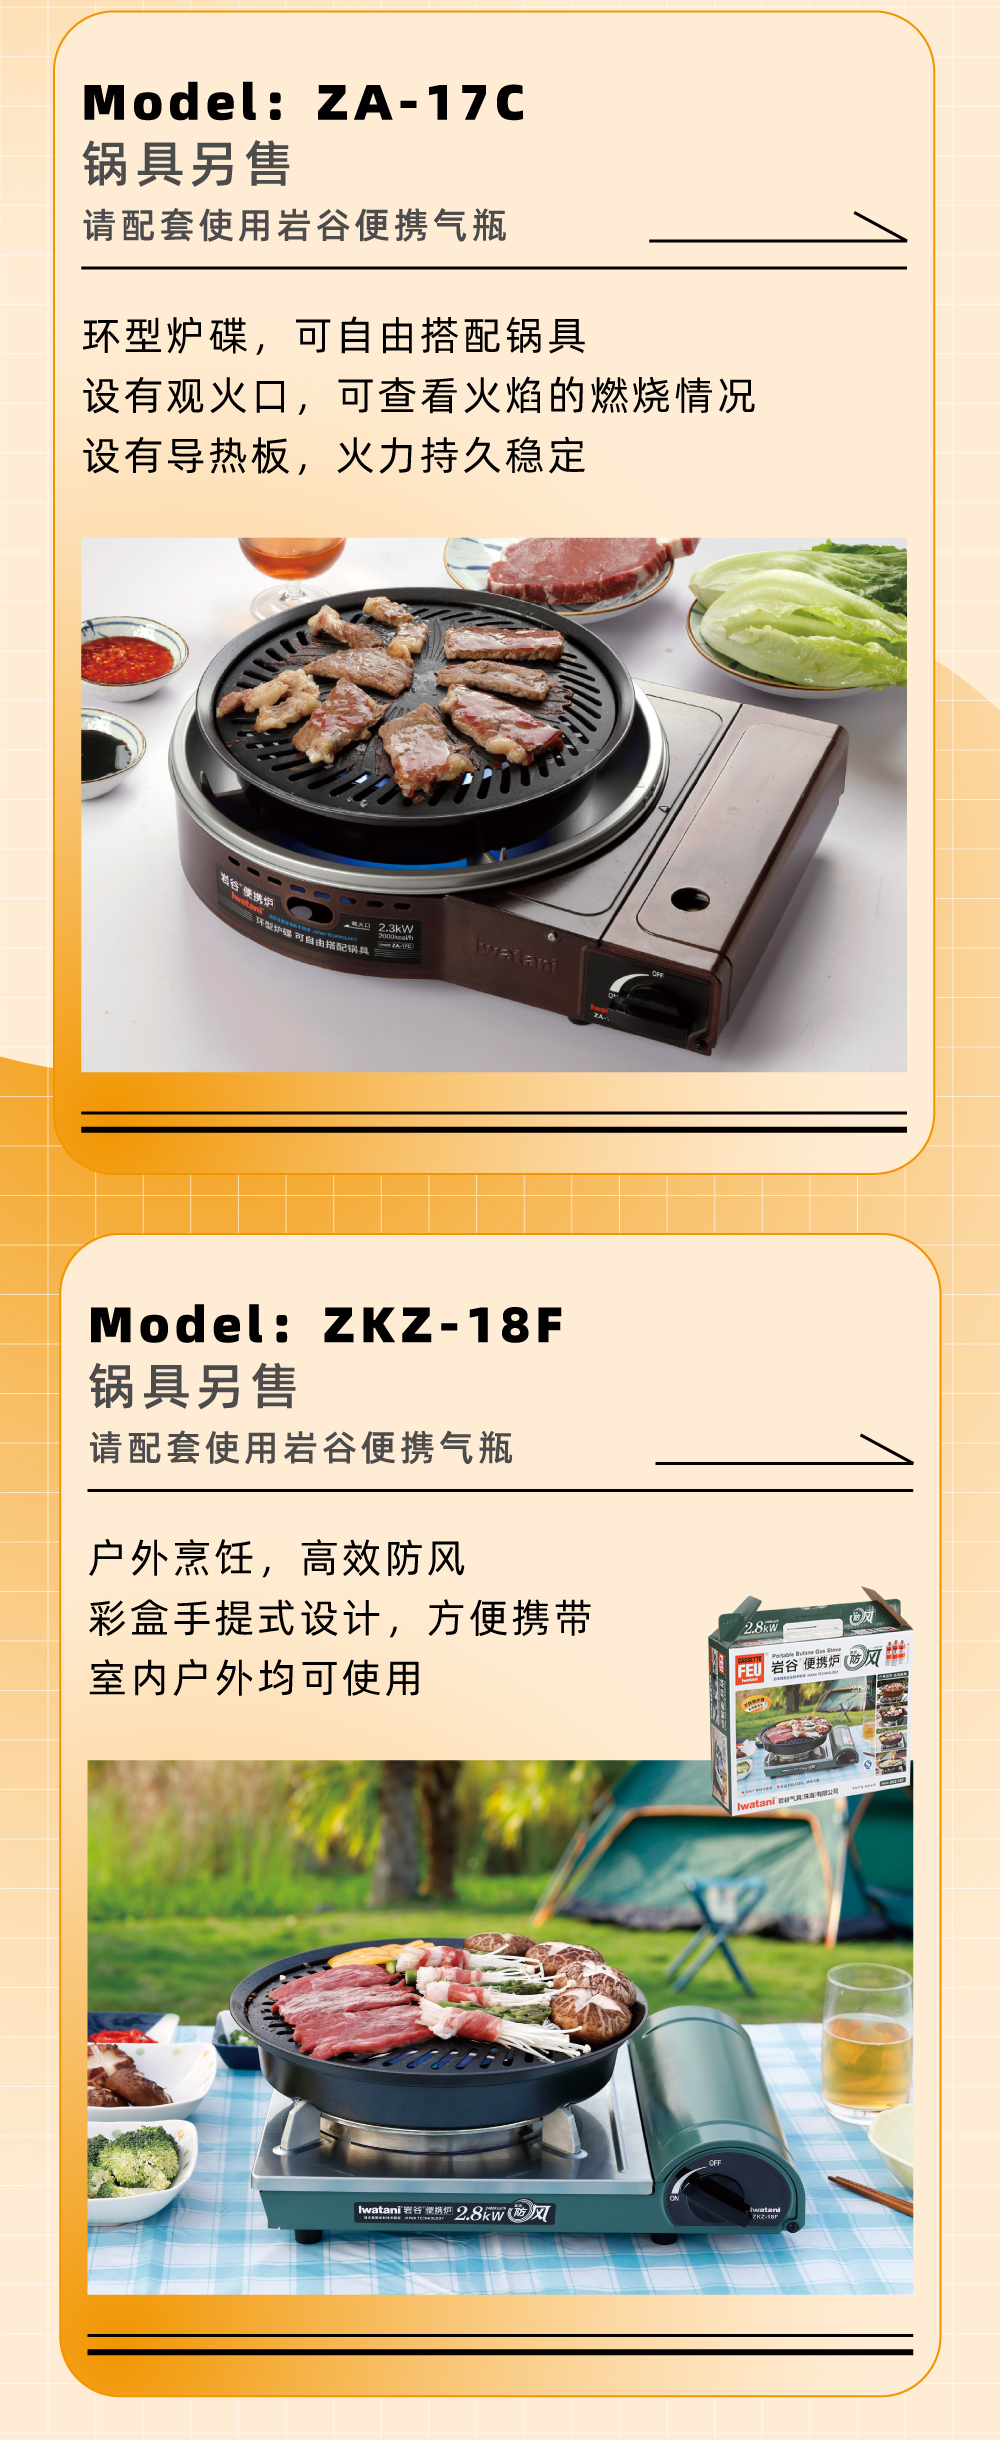 Model：ZA-17C